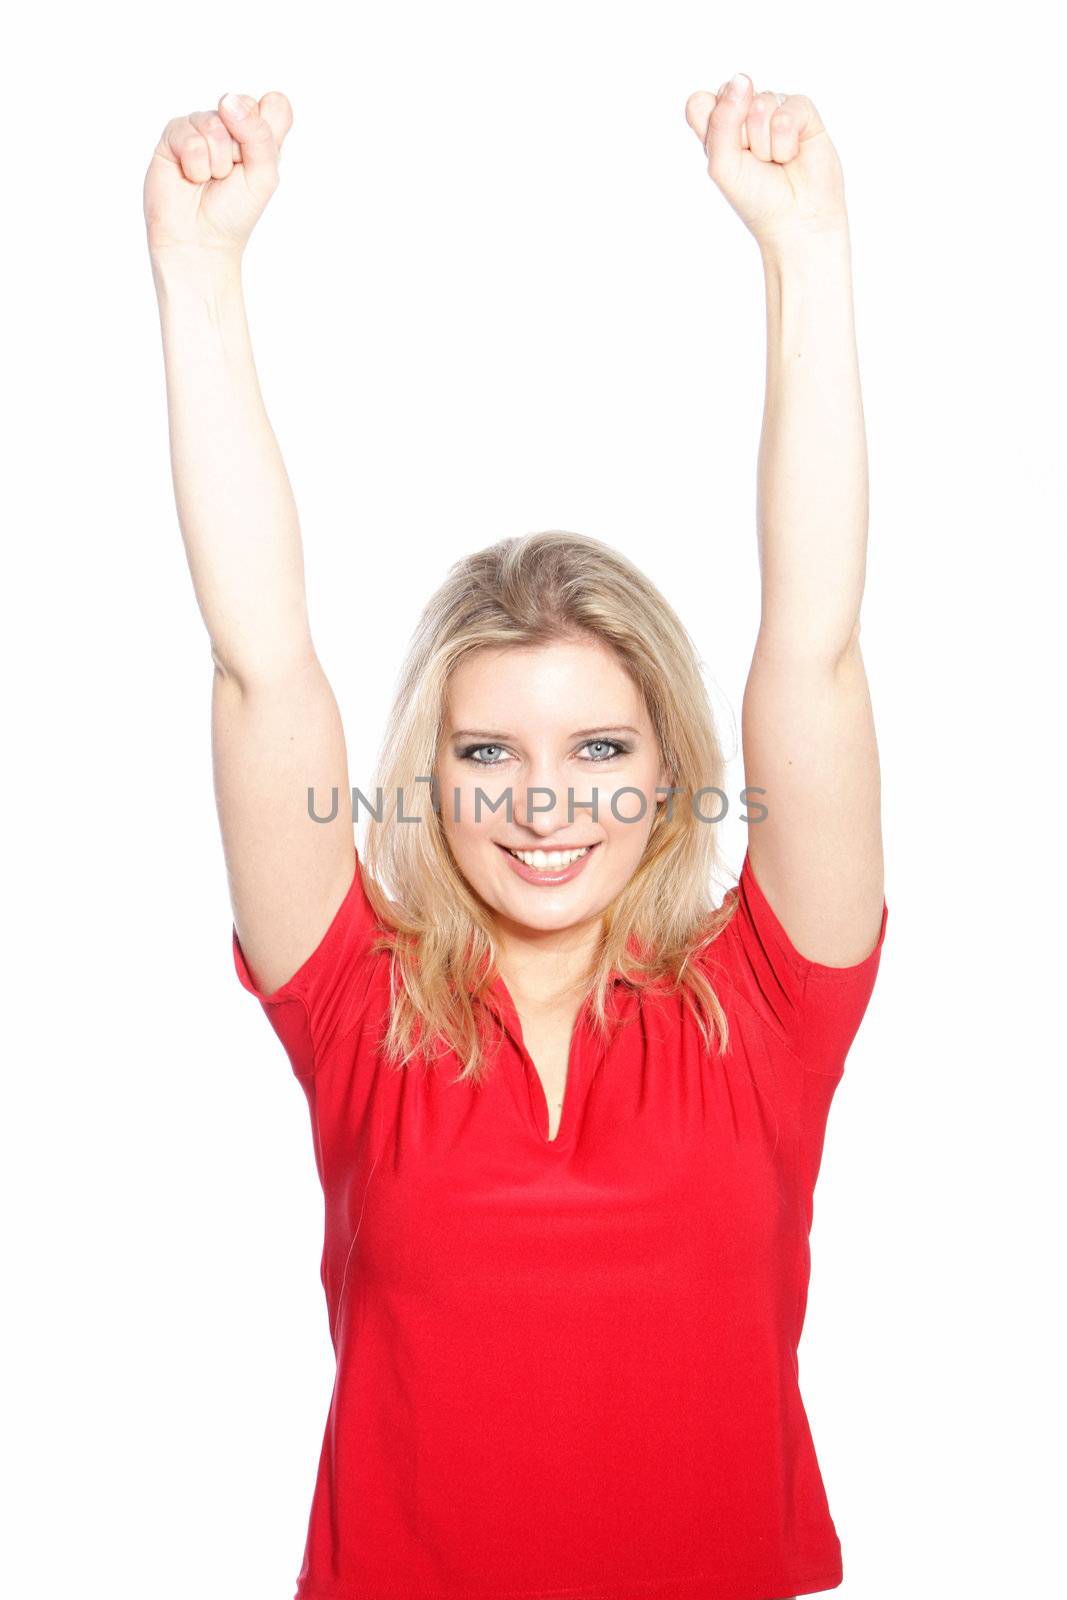 Triumphant woman raising her arms by Farina6000